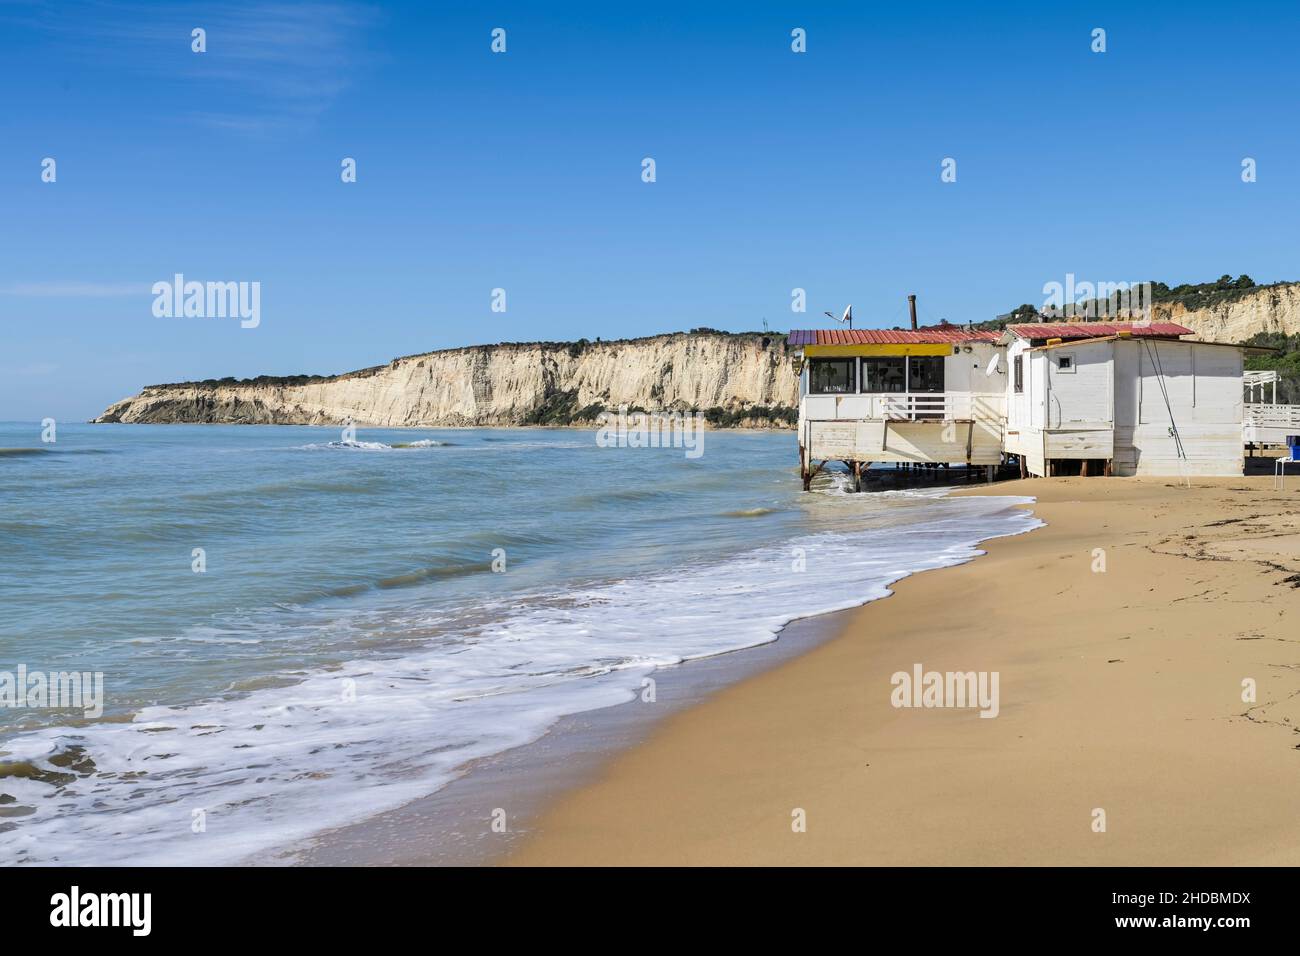 Strand von Eraclea Minoa, Strandbar, Kalkfelsen, Sizilien, Italien Foto de stock